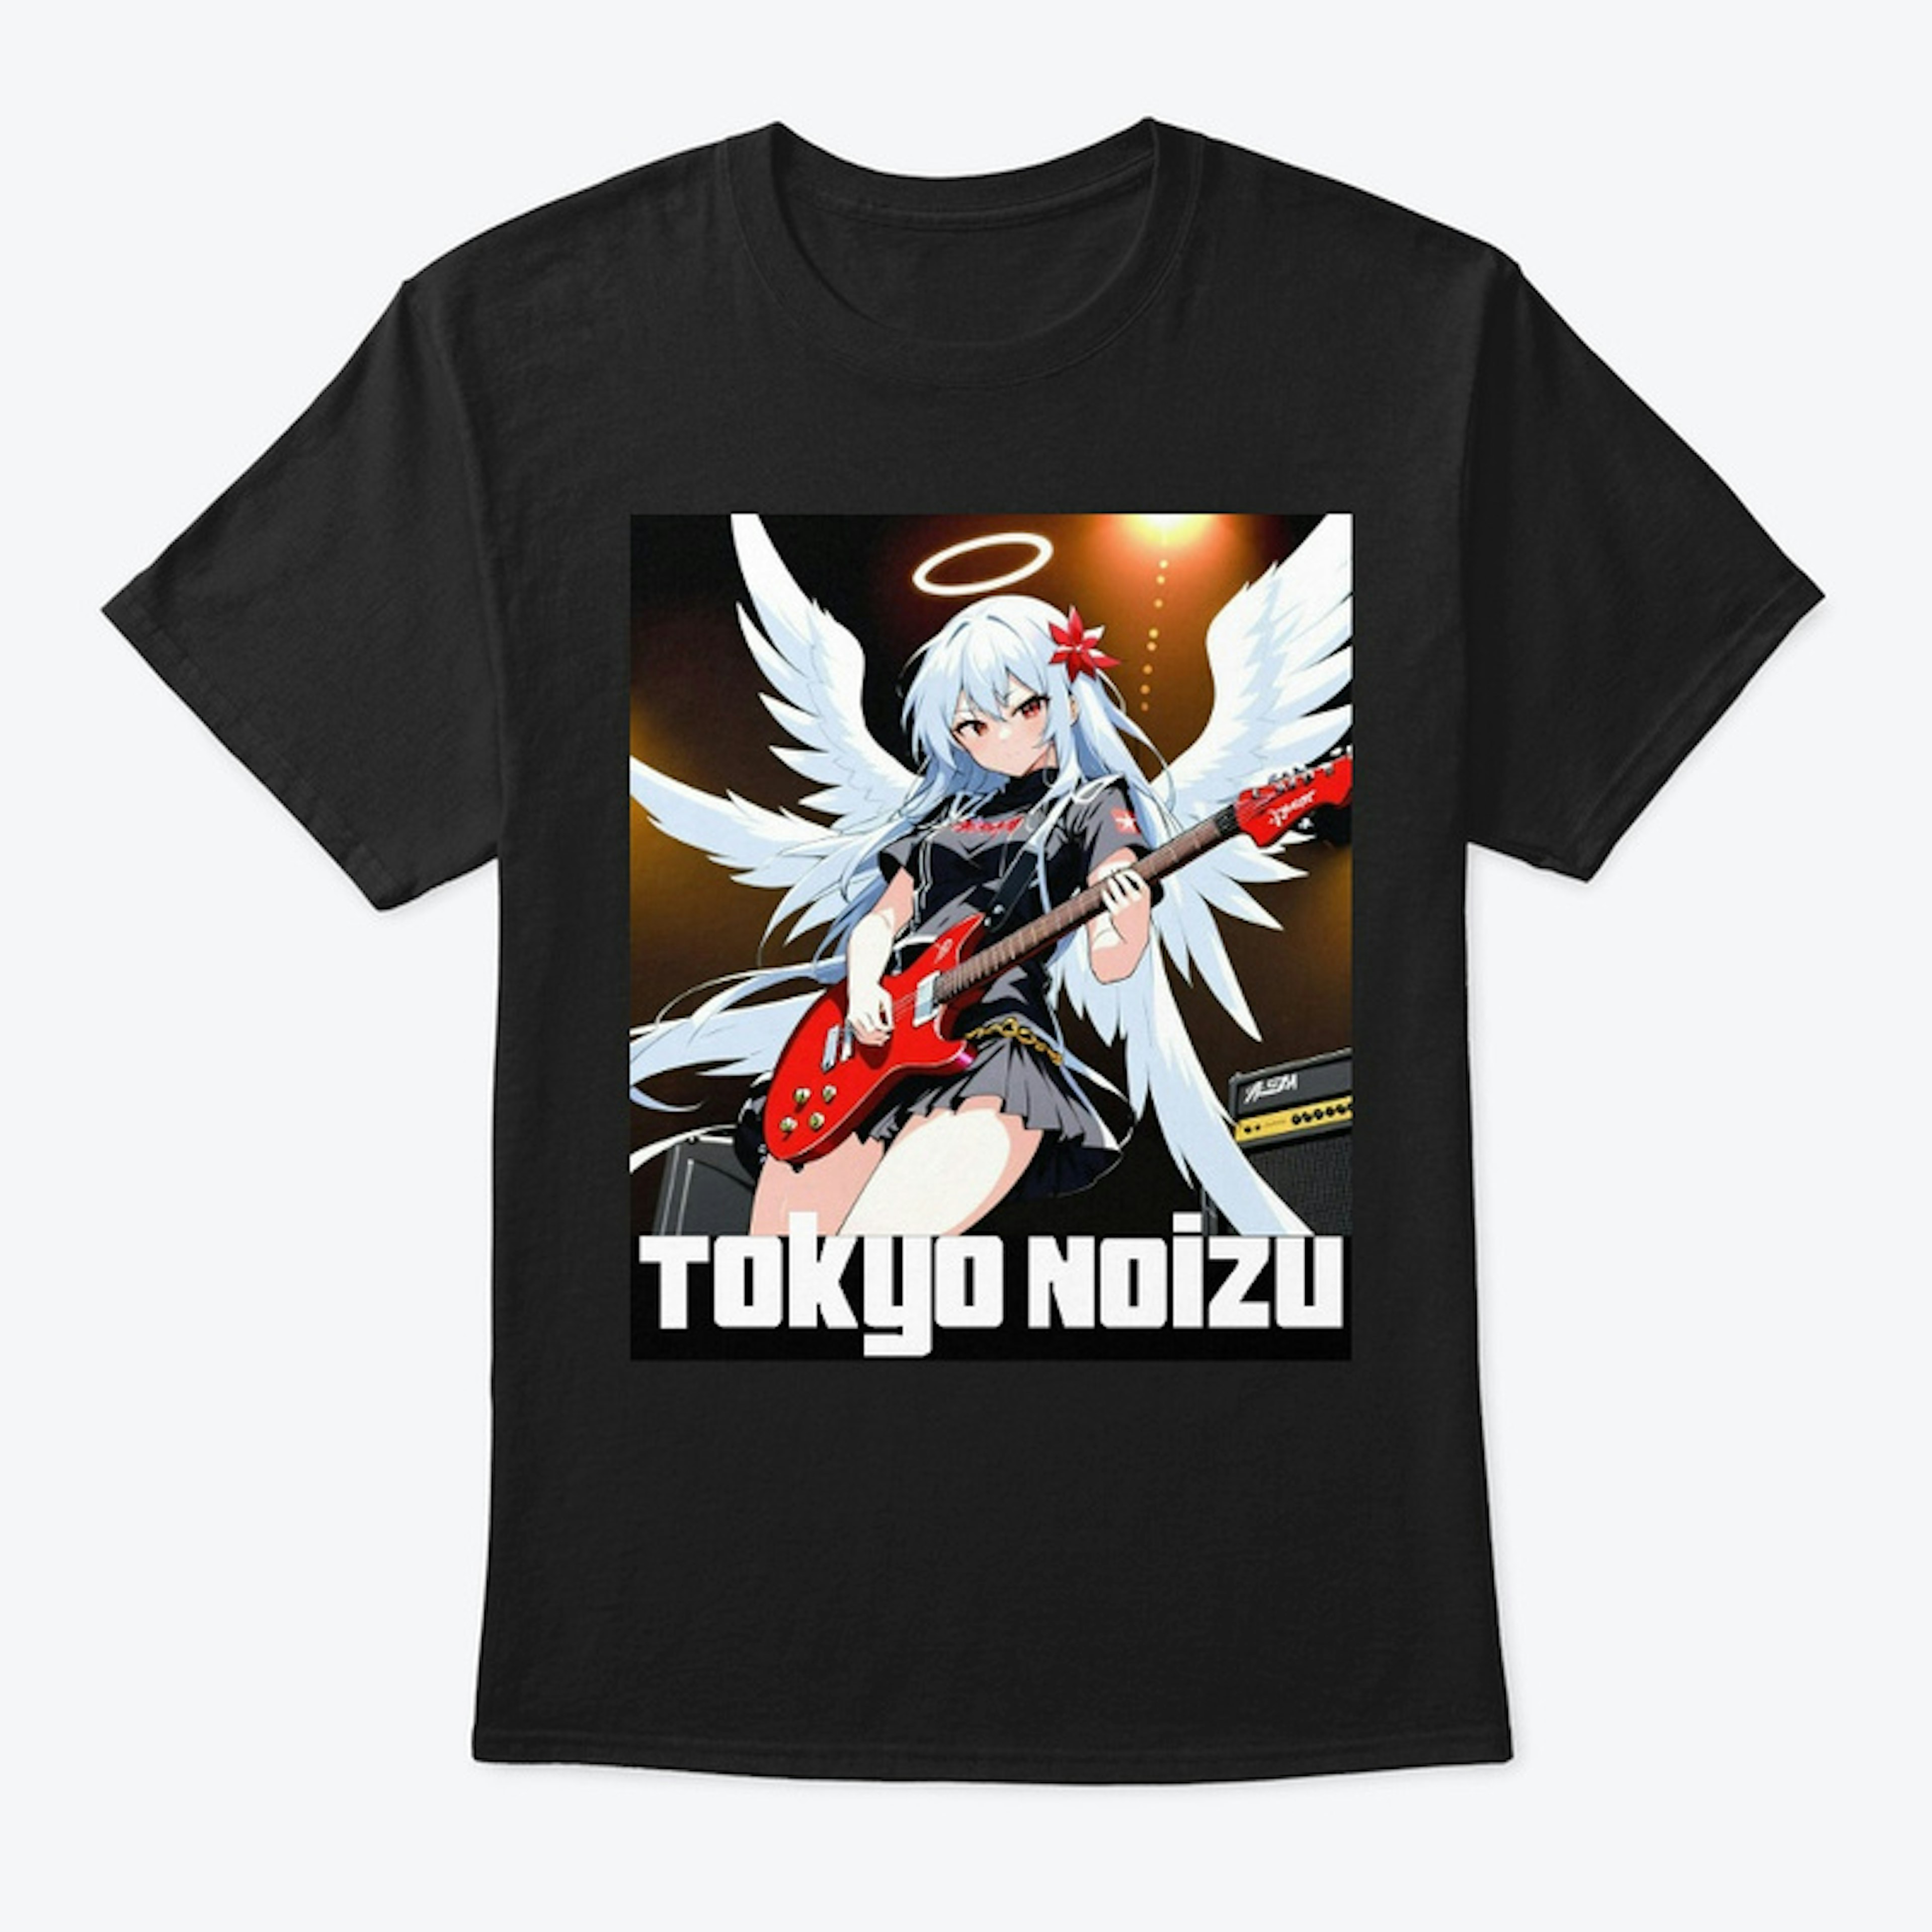 TOKYO NOIZU: Anime Guitar Angel